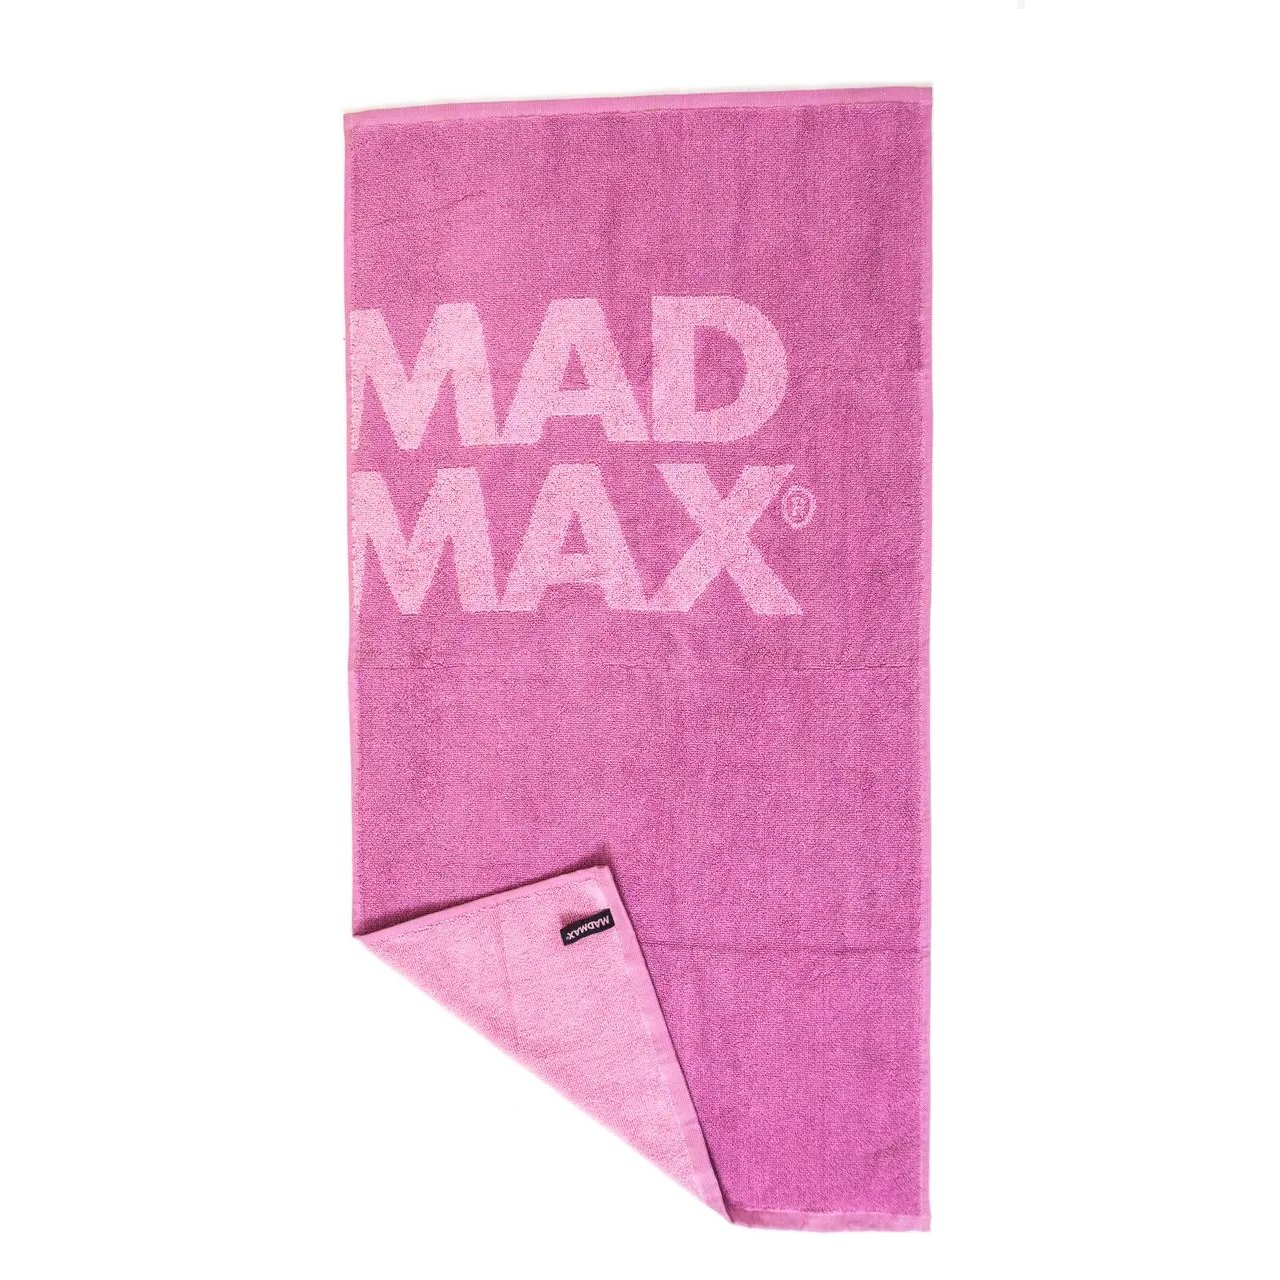 Аксессуары MAD MAX Полотенце MST 003 50*110 см, Pink,  ml, MadMax. Accessories. 